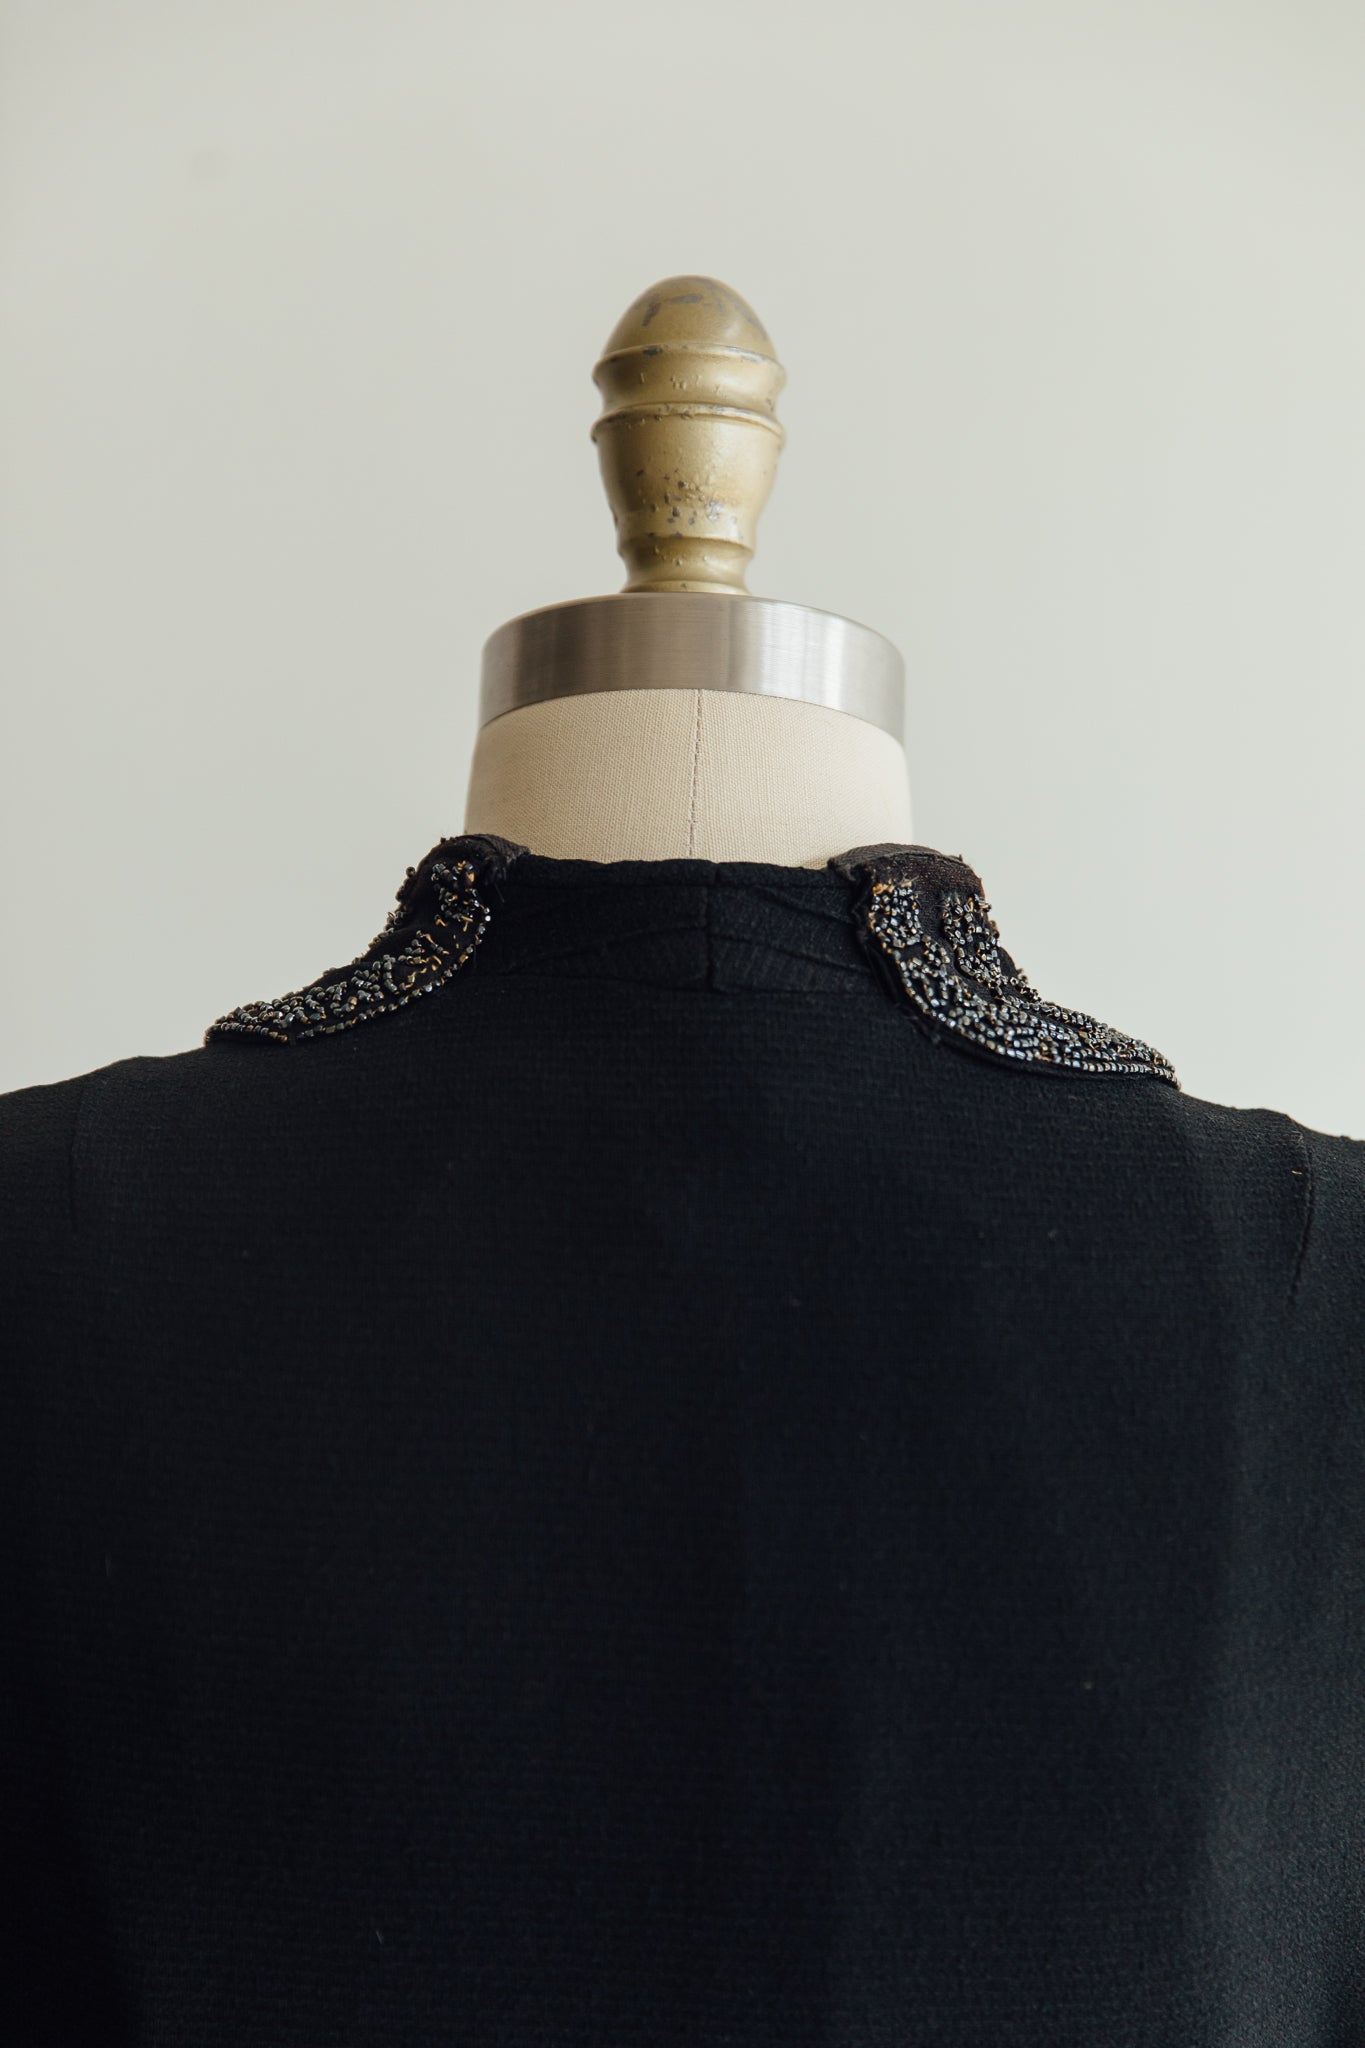 Hand-Beaded Black Embellished Collar Wrap Coat